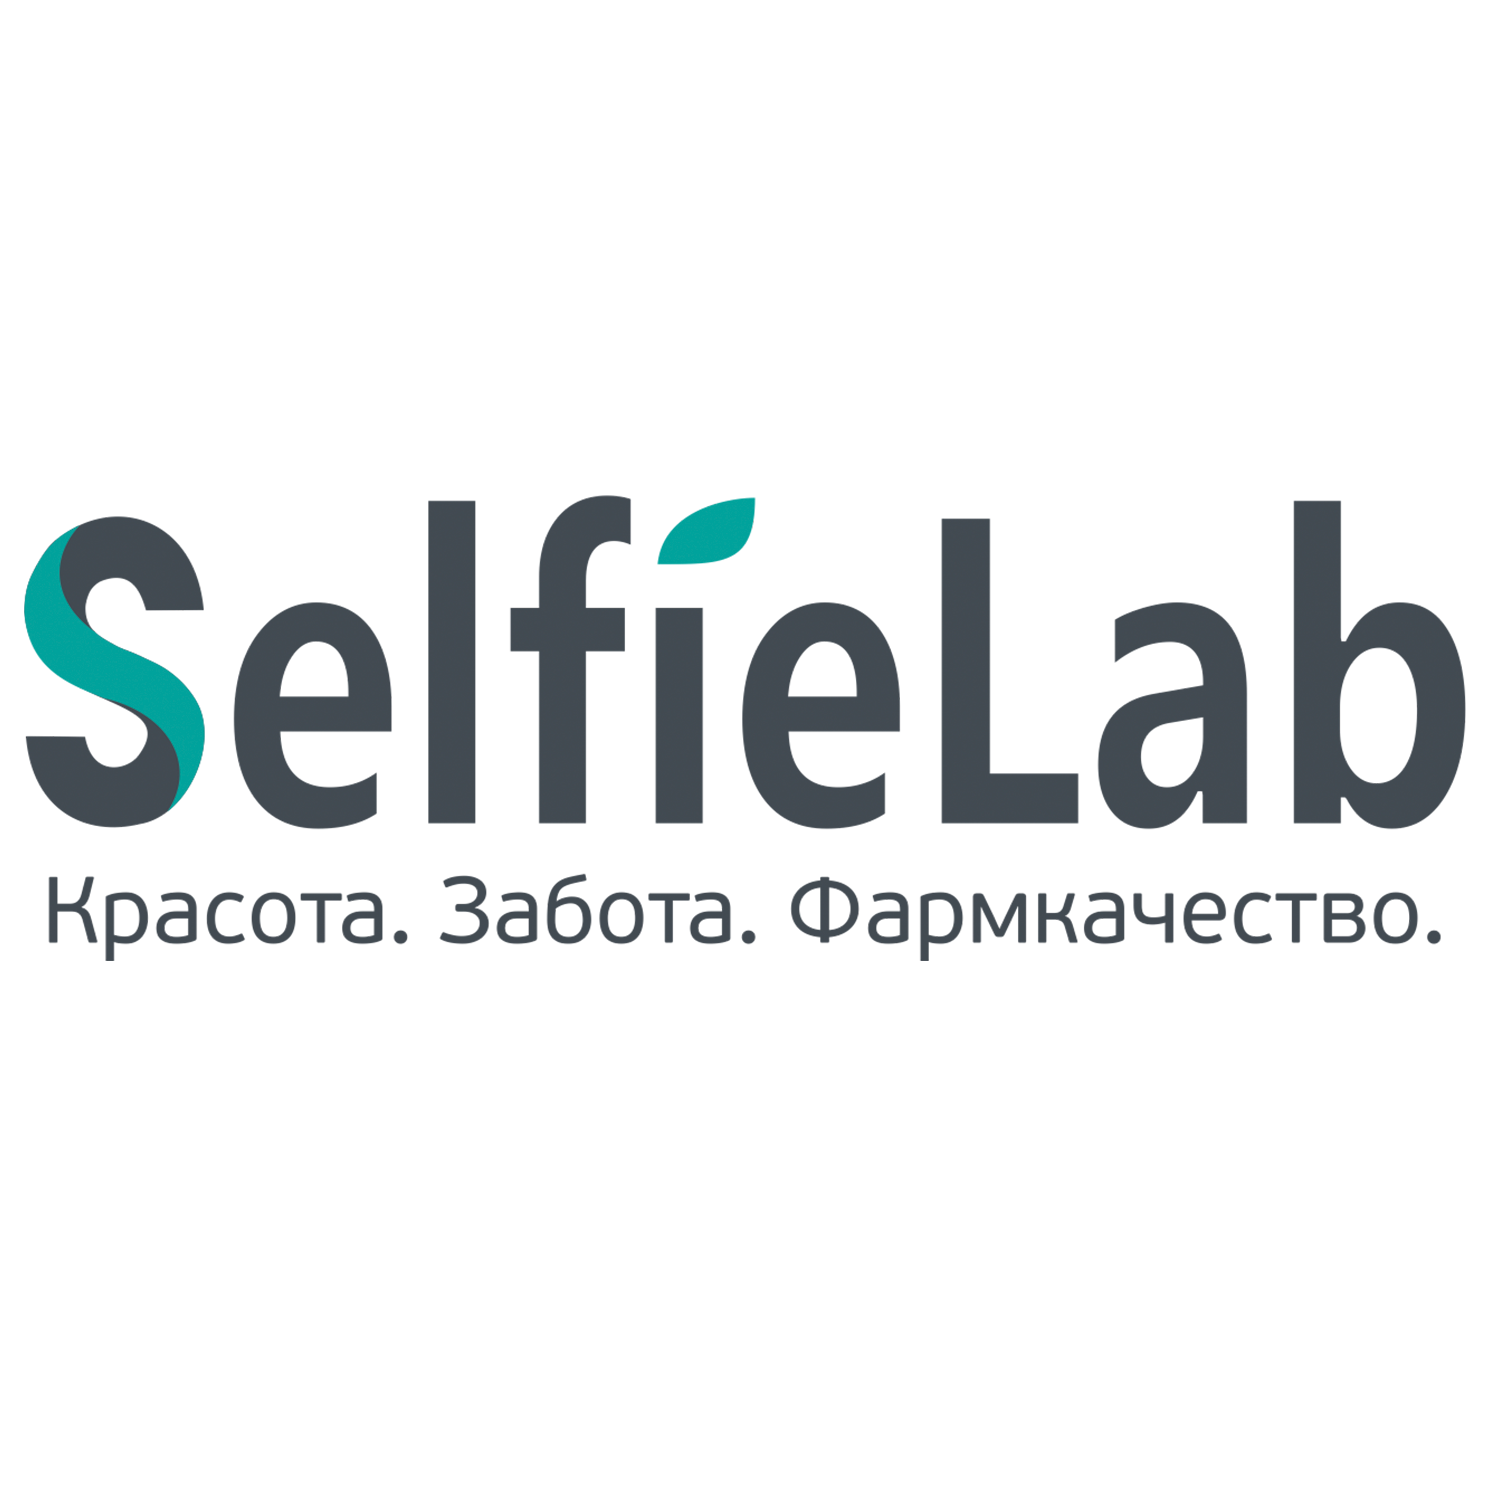 Selfielab крем. SELFIELAB косметика. SELFIELAB логотип. Селфилаб белорусская косметика. Белорусская косметика логотип.